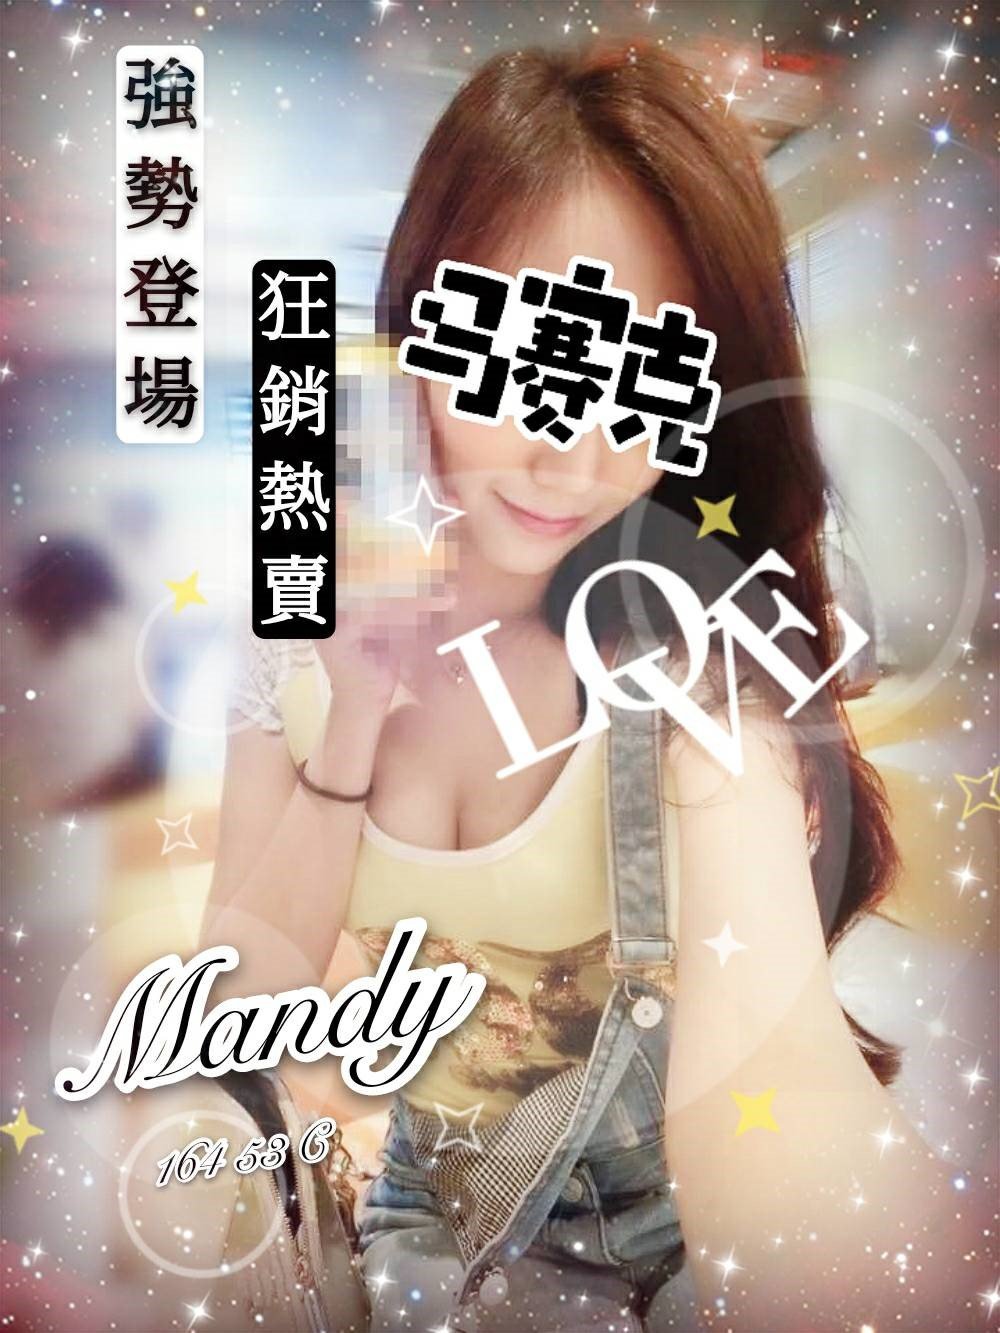 Mandy.jpg